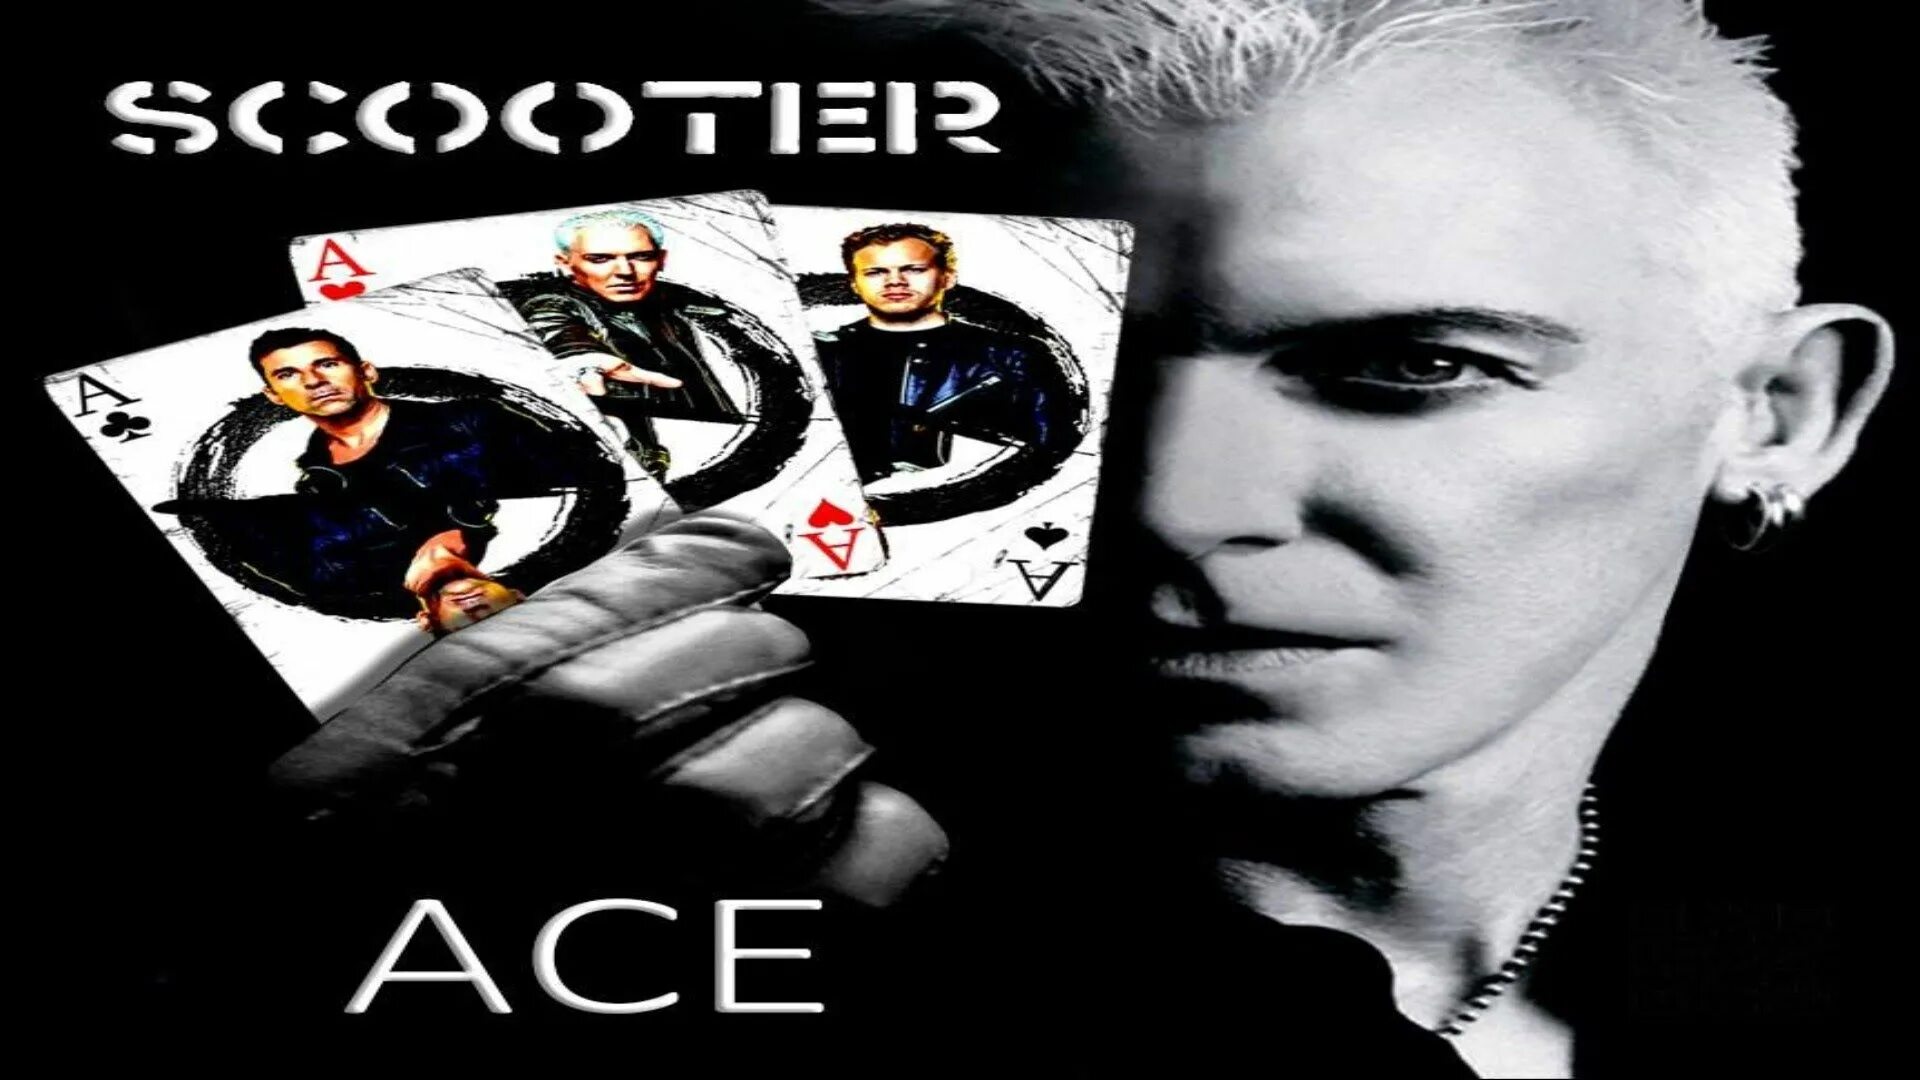 Scooter Ace альбом. Постеры группы скутер. Плакат скутер группа. Группа Scooter, обложки альбомов..